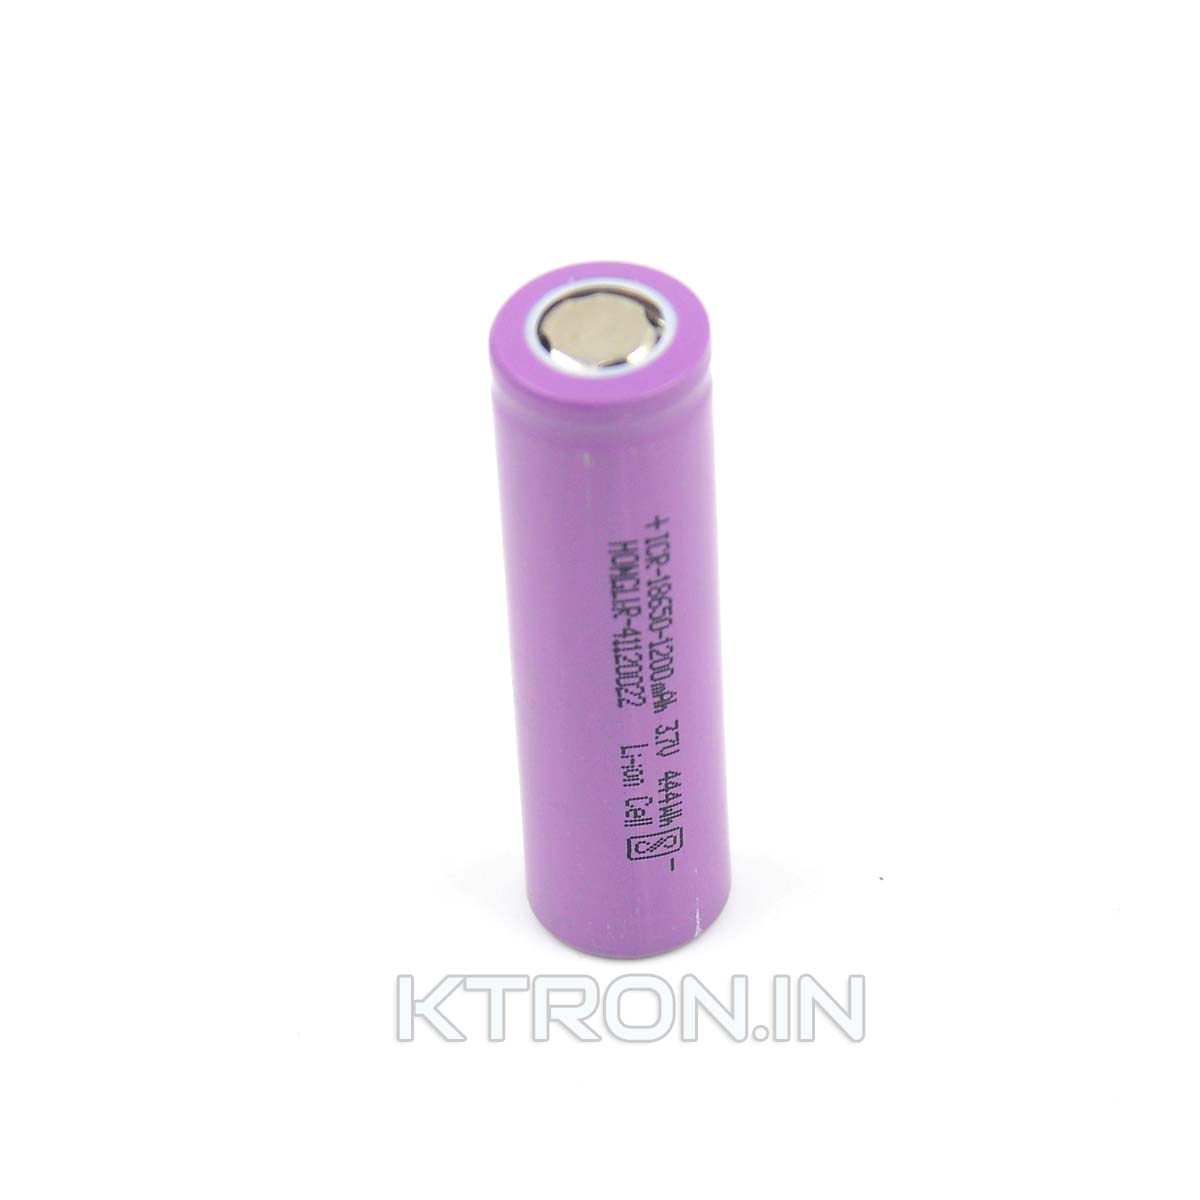 Buy 18650 1200mah Lithium Ion Battery - Hongli- 0.5C - KTRON India